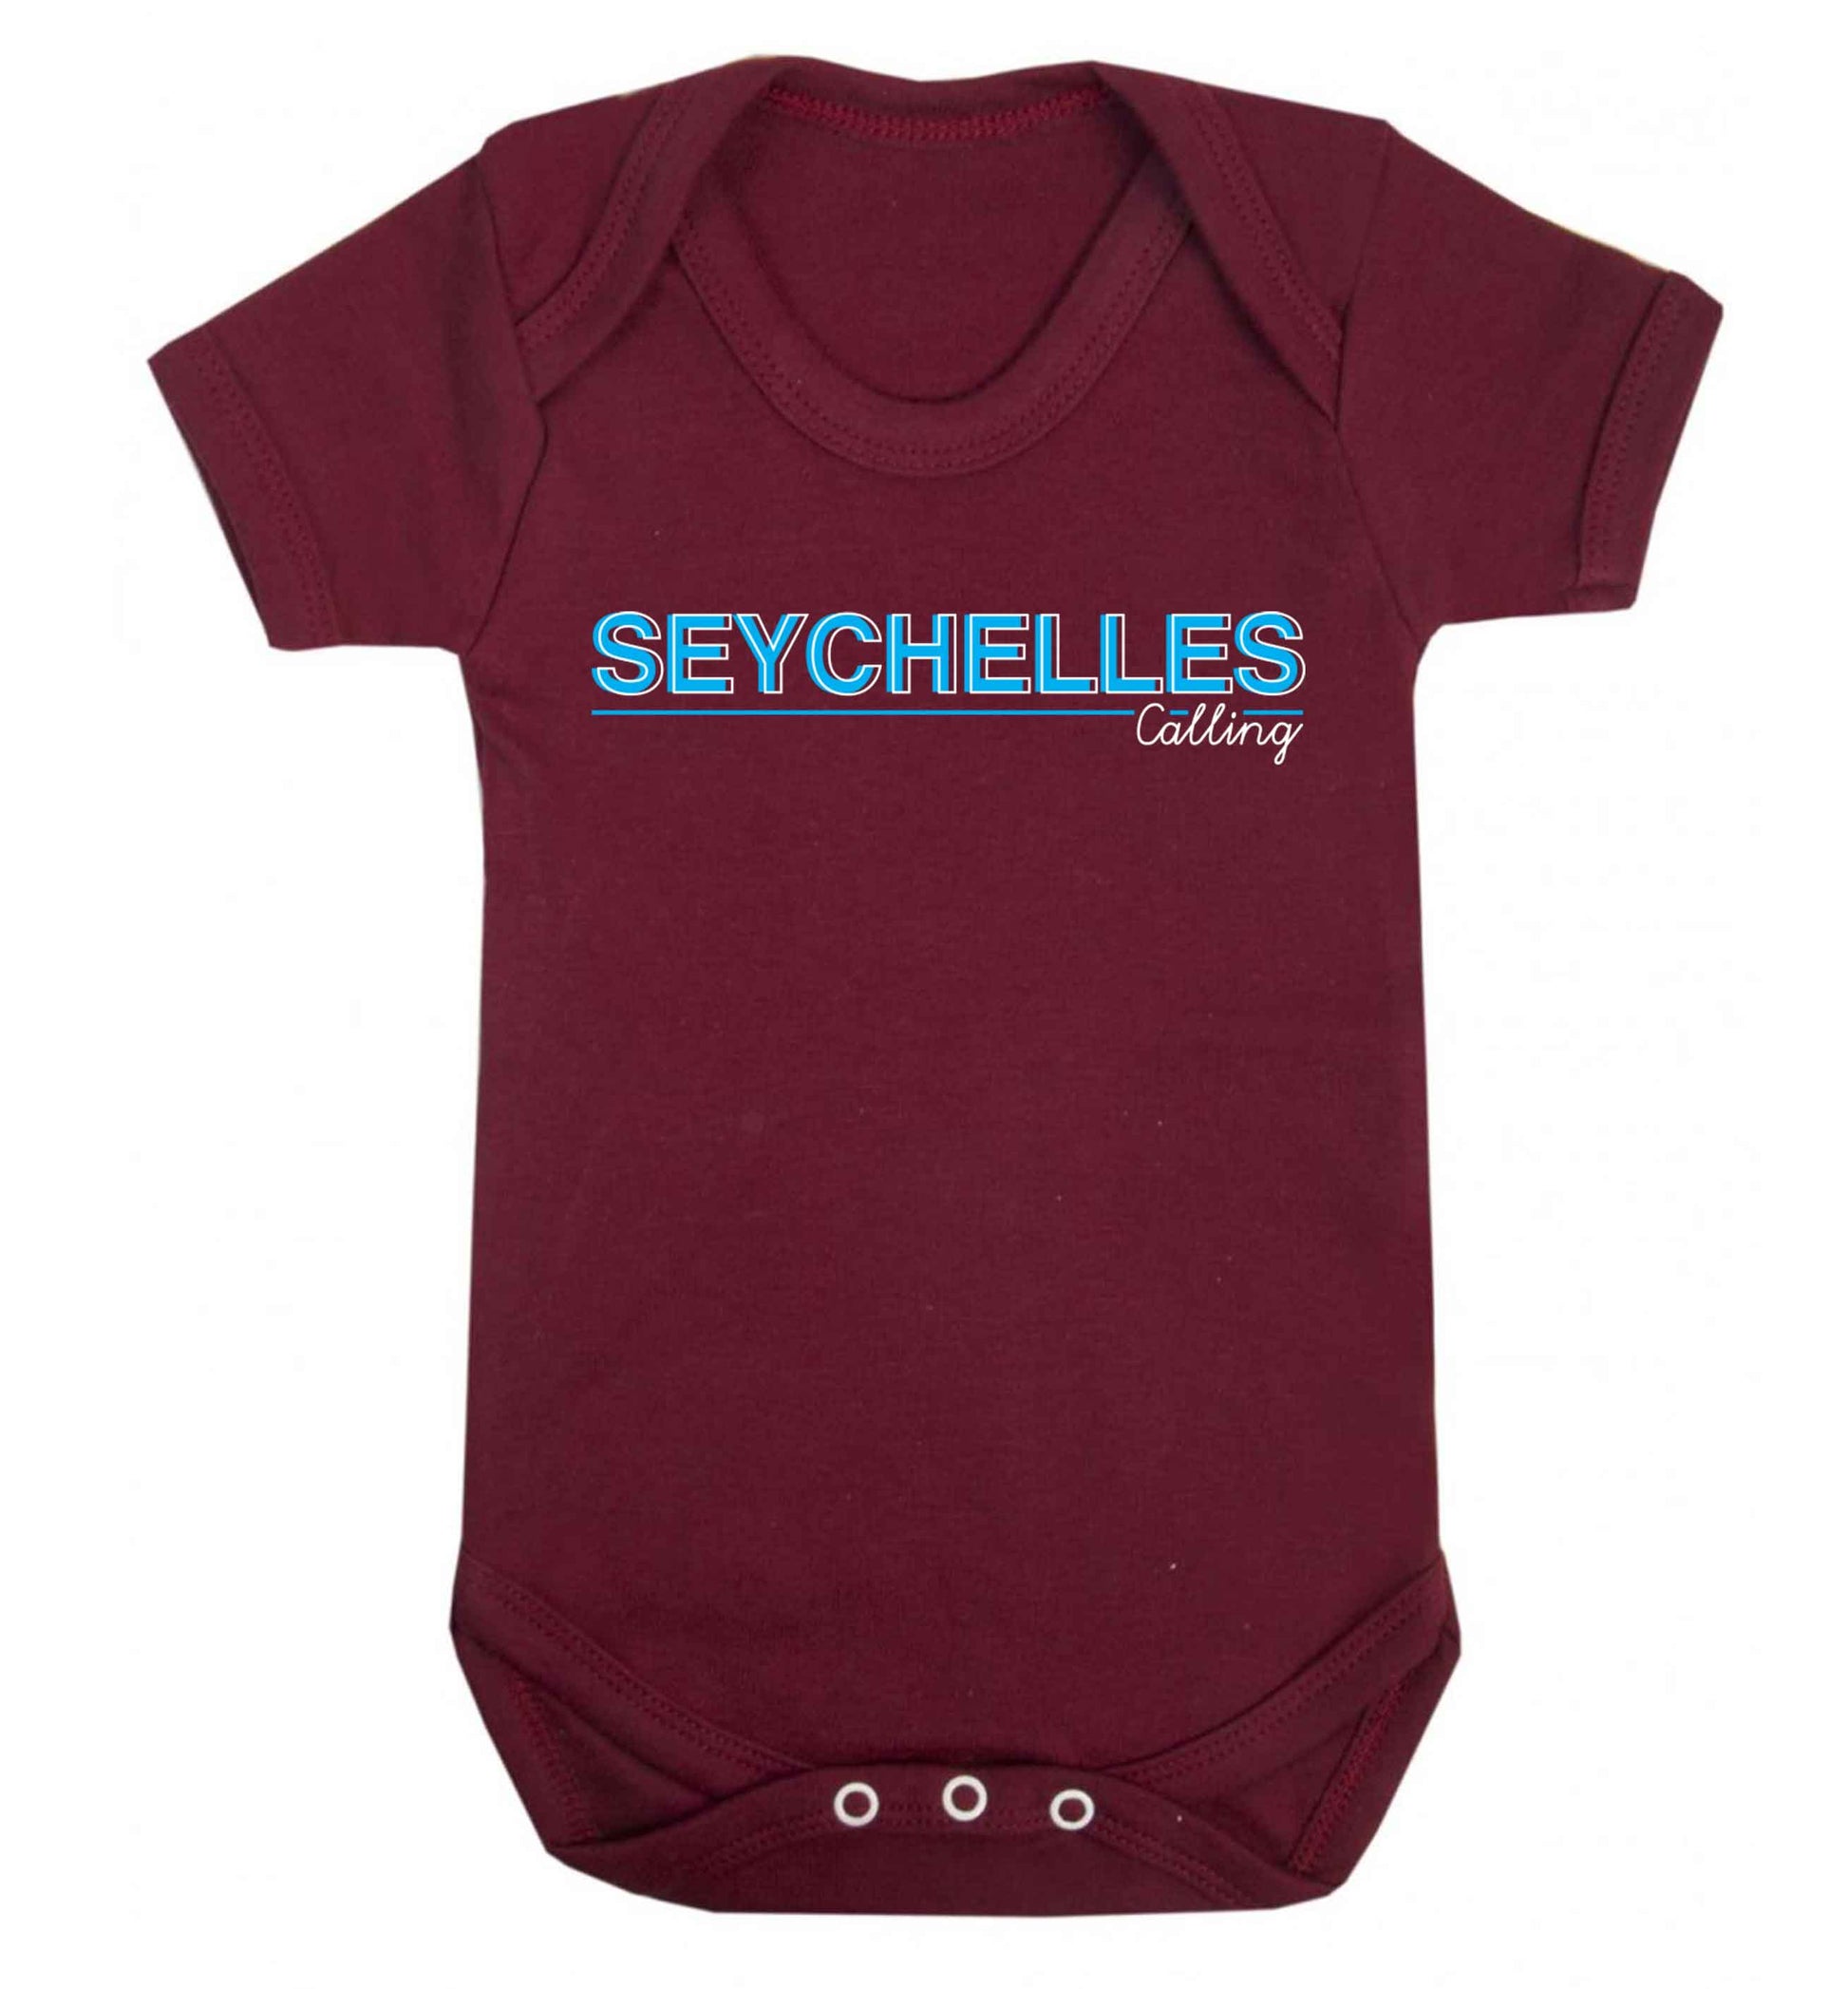 Seychelles calling Baby Vest maroon 18-24 months